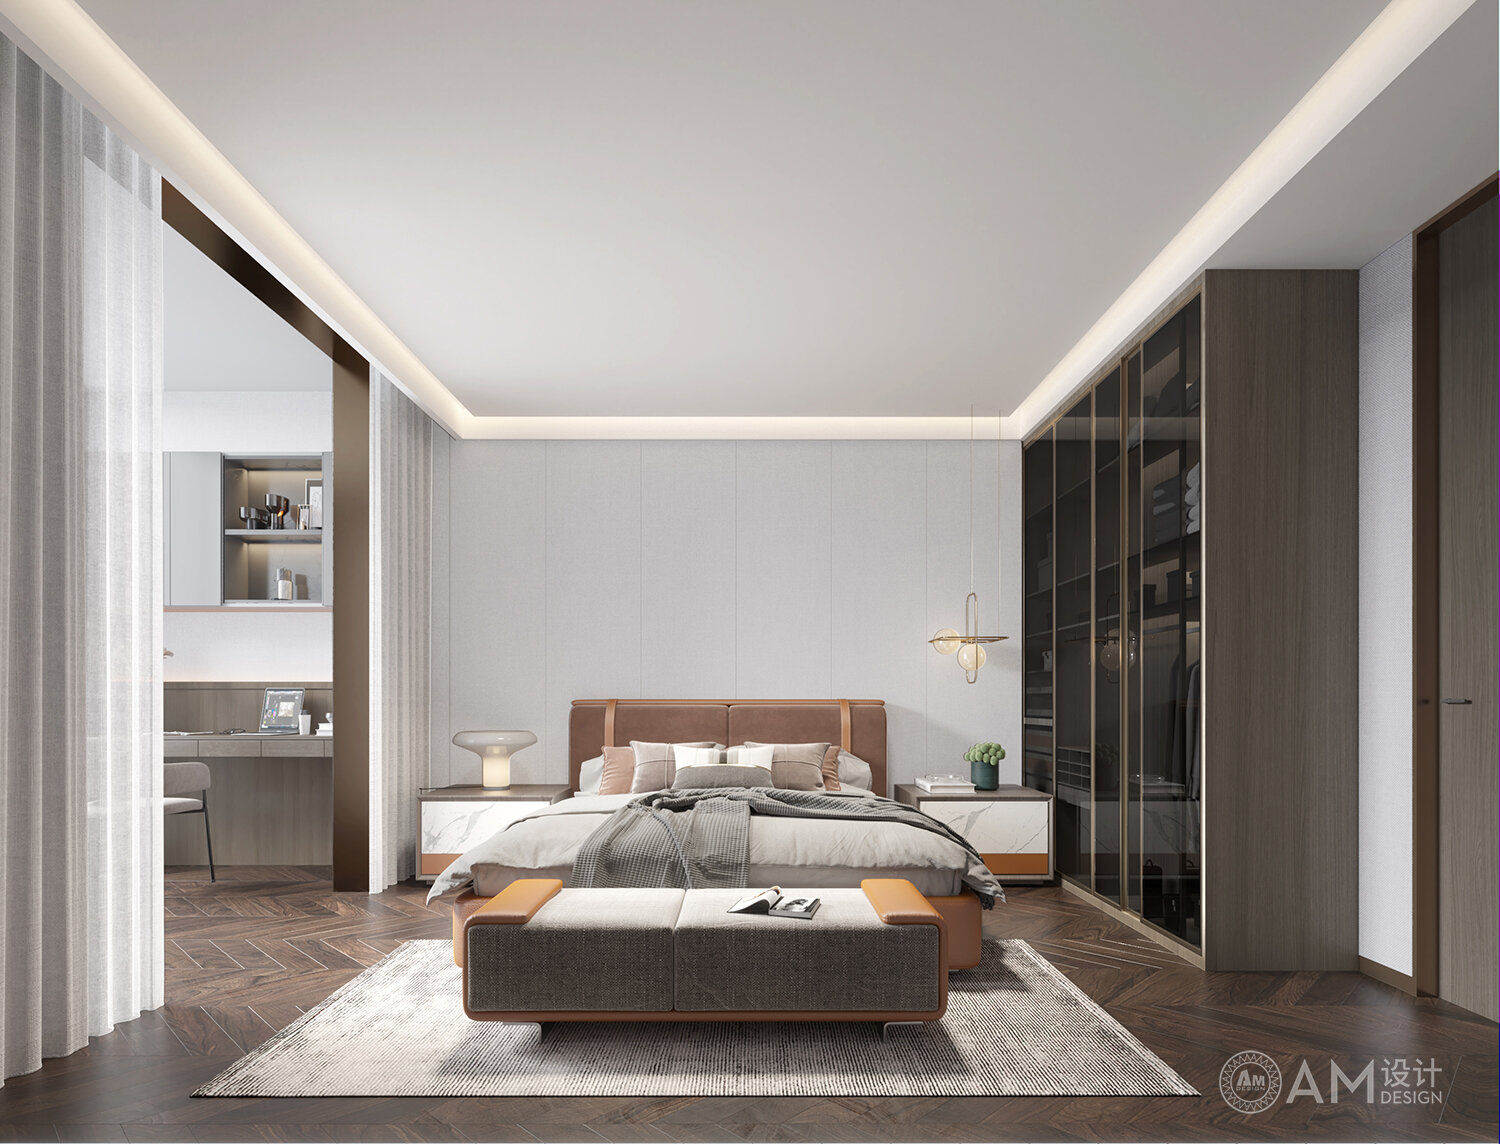 AM DESIGN | Shangluo Mansion Guest Room Design, Shaanxi